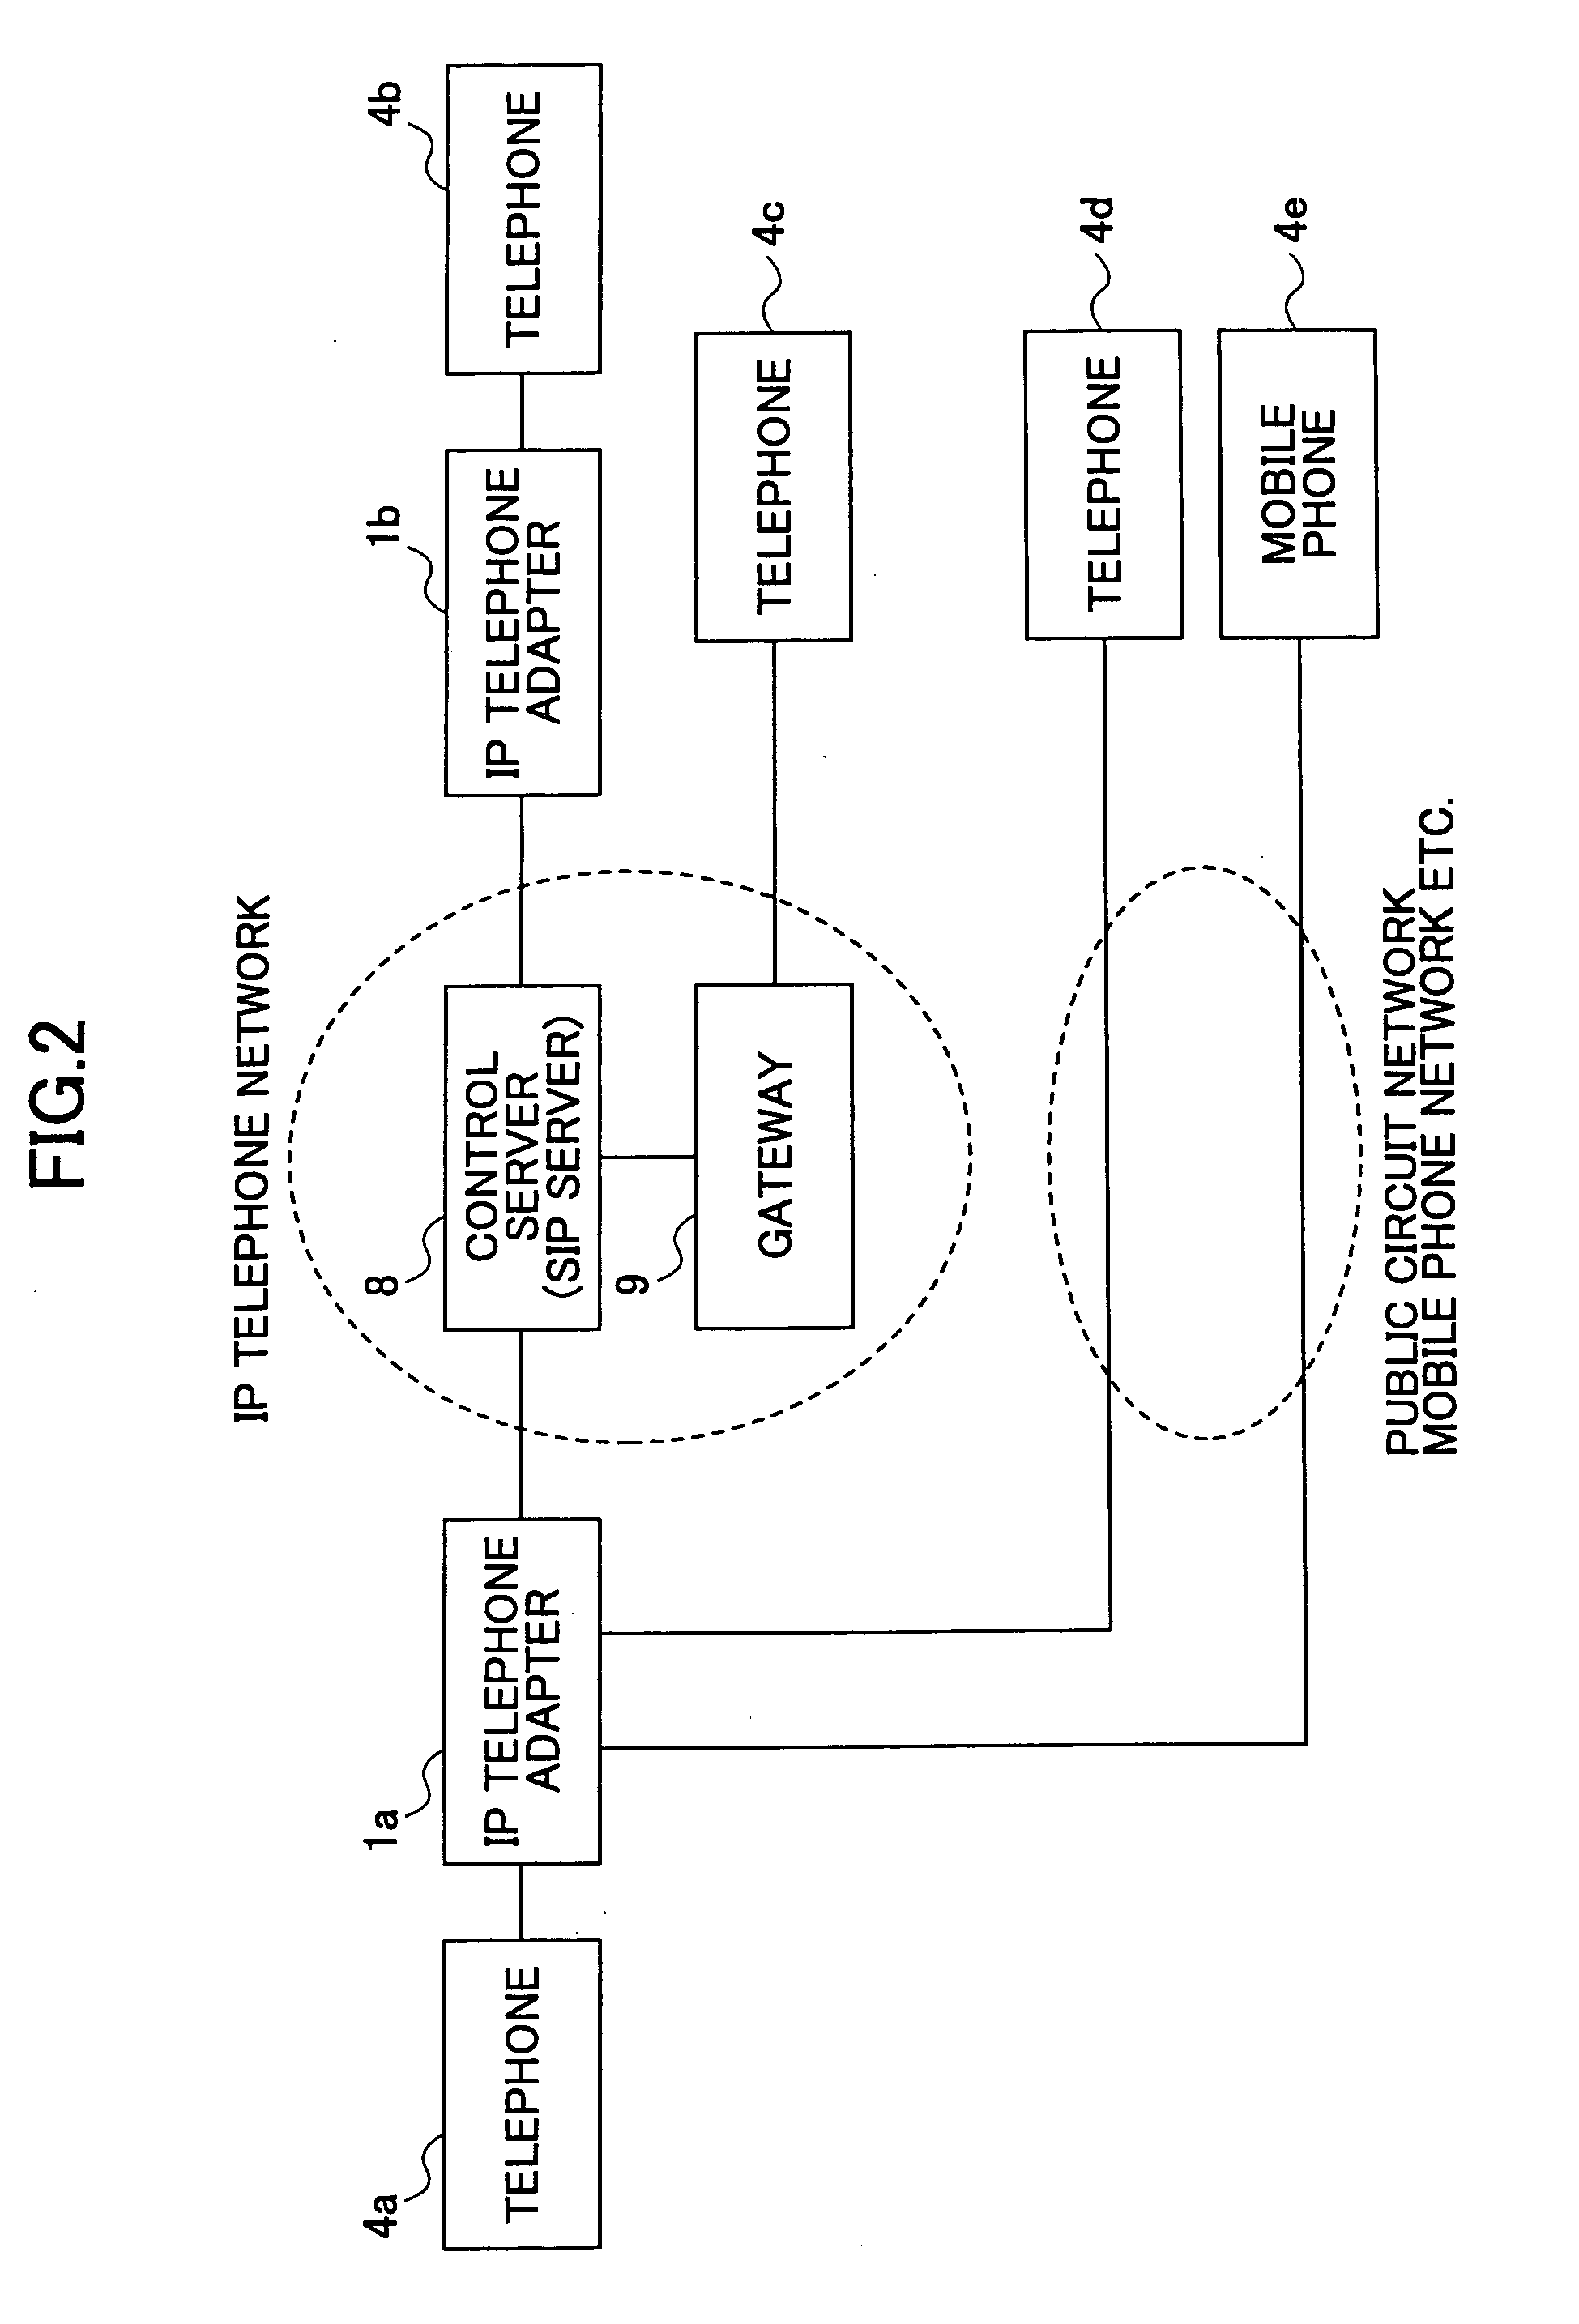 Circuit control apparatus and method